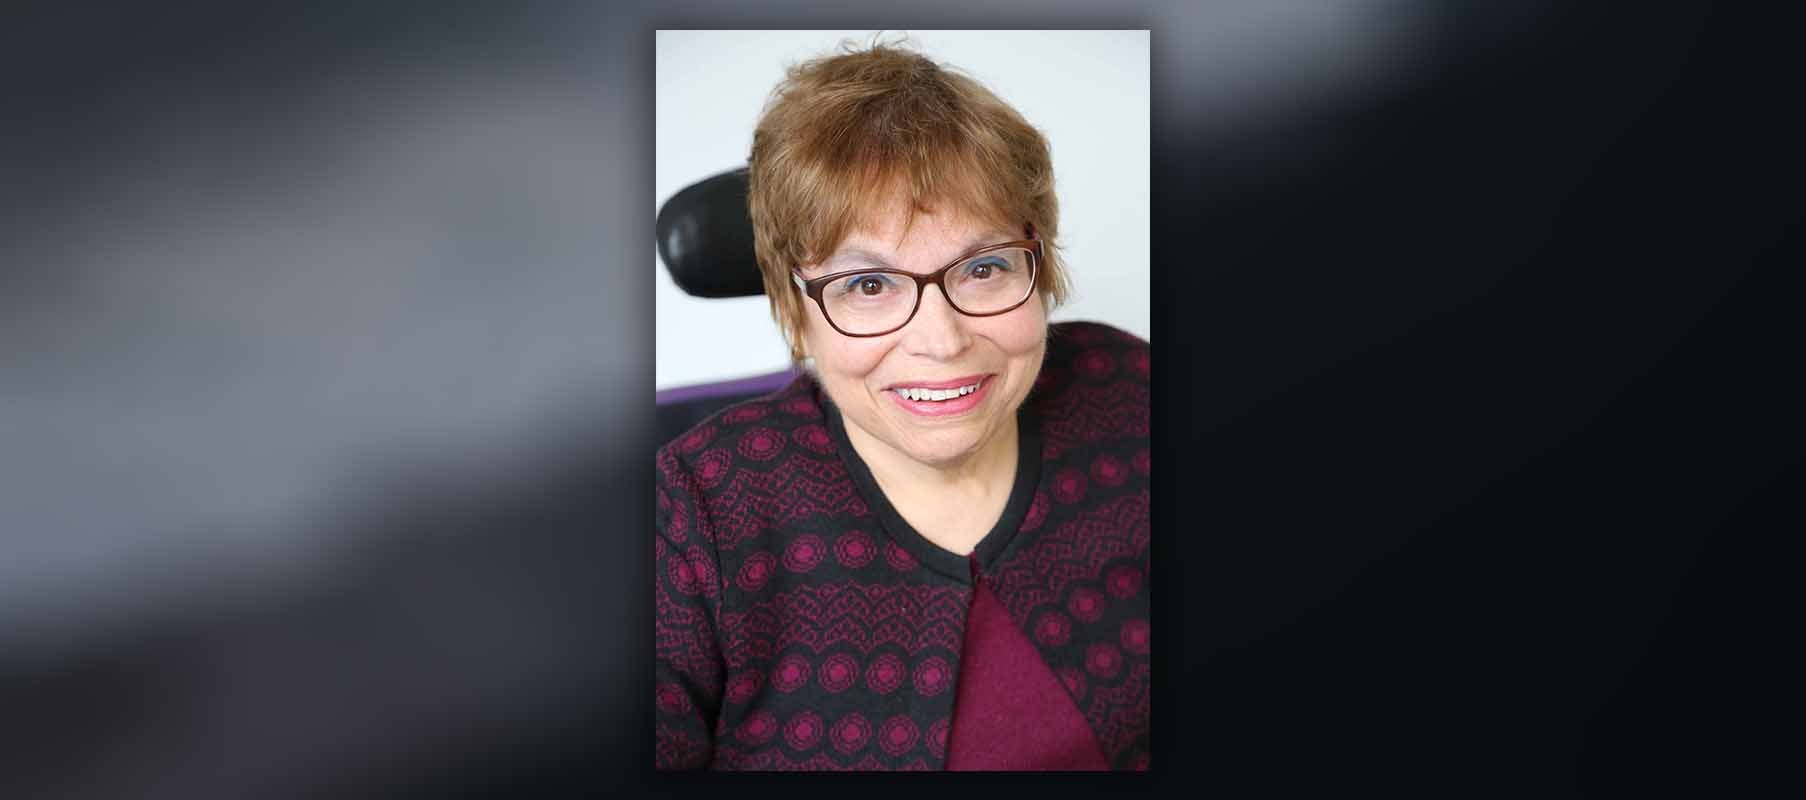 Beacon Author and “Badass” Disability Rights Activist Judith Heumann Dies at 75